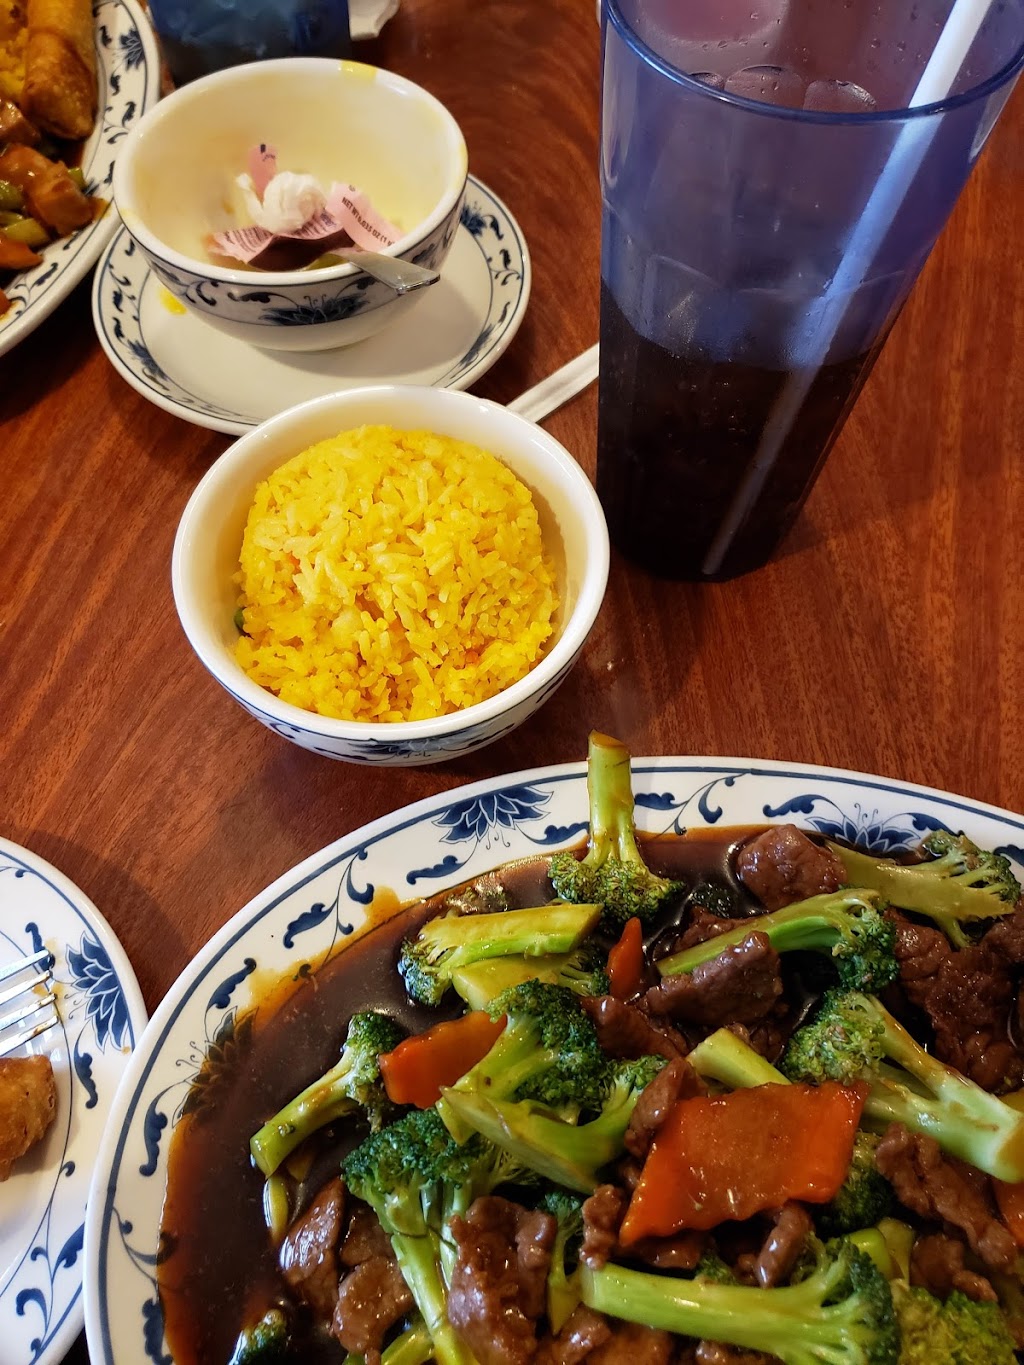 China Garden Restaurant | 401 S Main St, Pleasanton, TX 78064, USA | Phone: (830) 569-5548